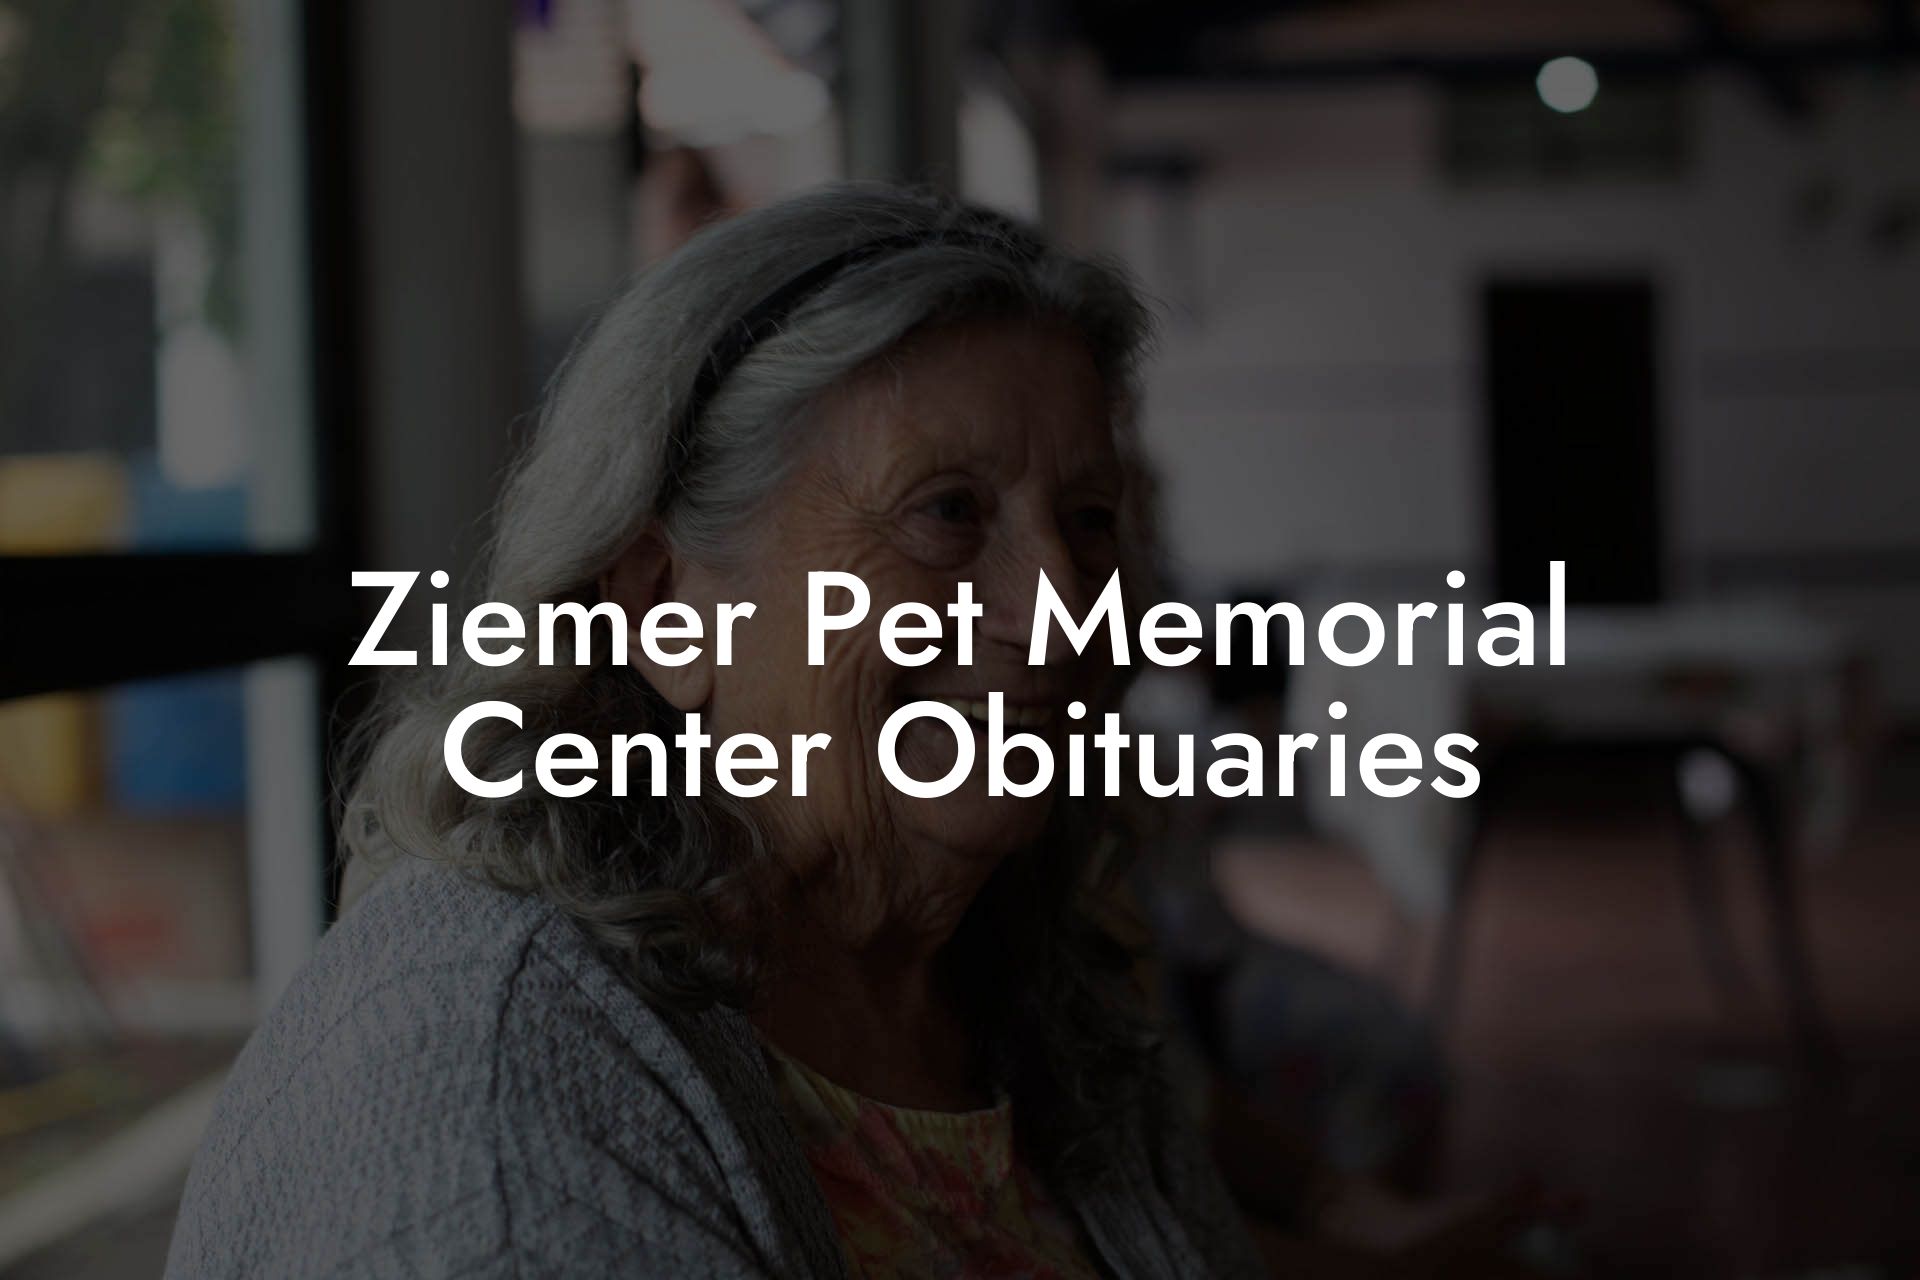 Ziemer Pet Memorial Center Obituaries